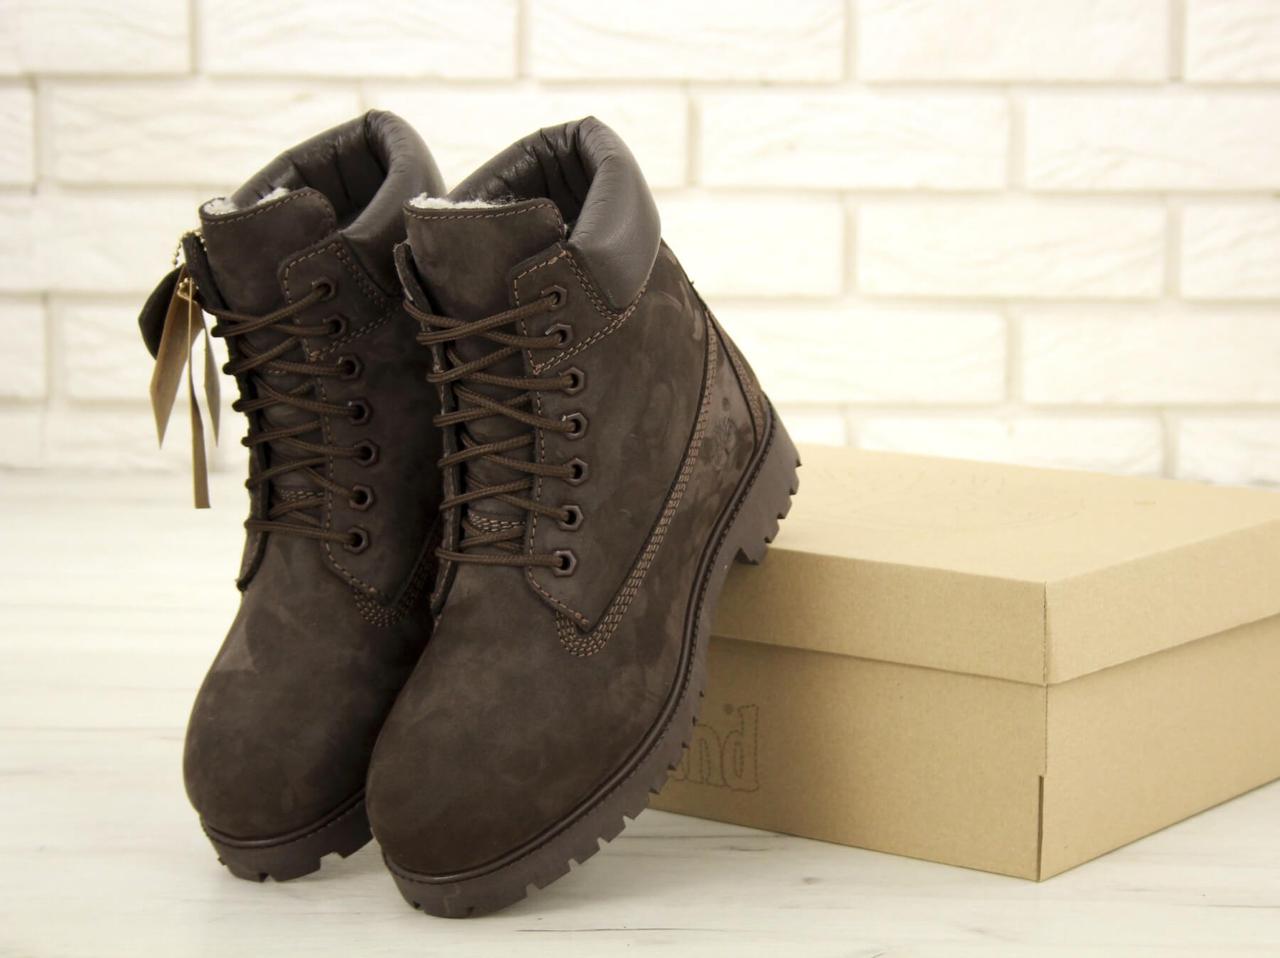 

Мужские ботинки Тимберленд коричневые на натуральном меху 100% цигейка (Мужские ботинки Timberland коричневые), Коричневый